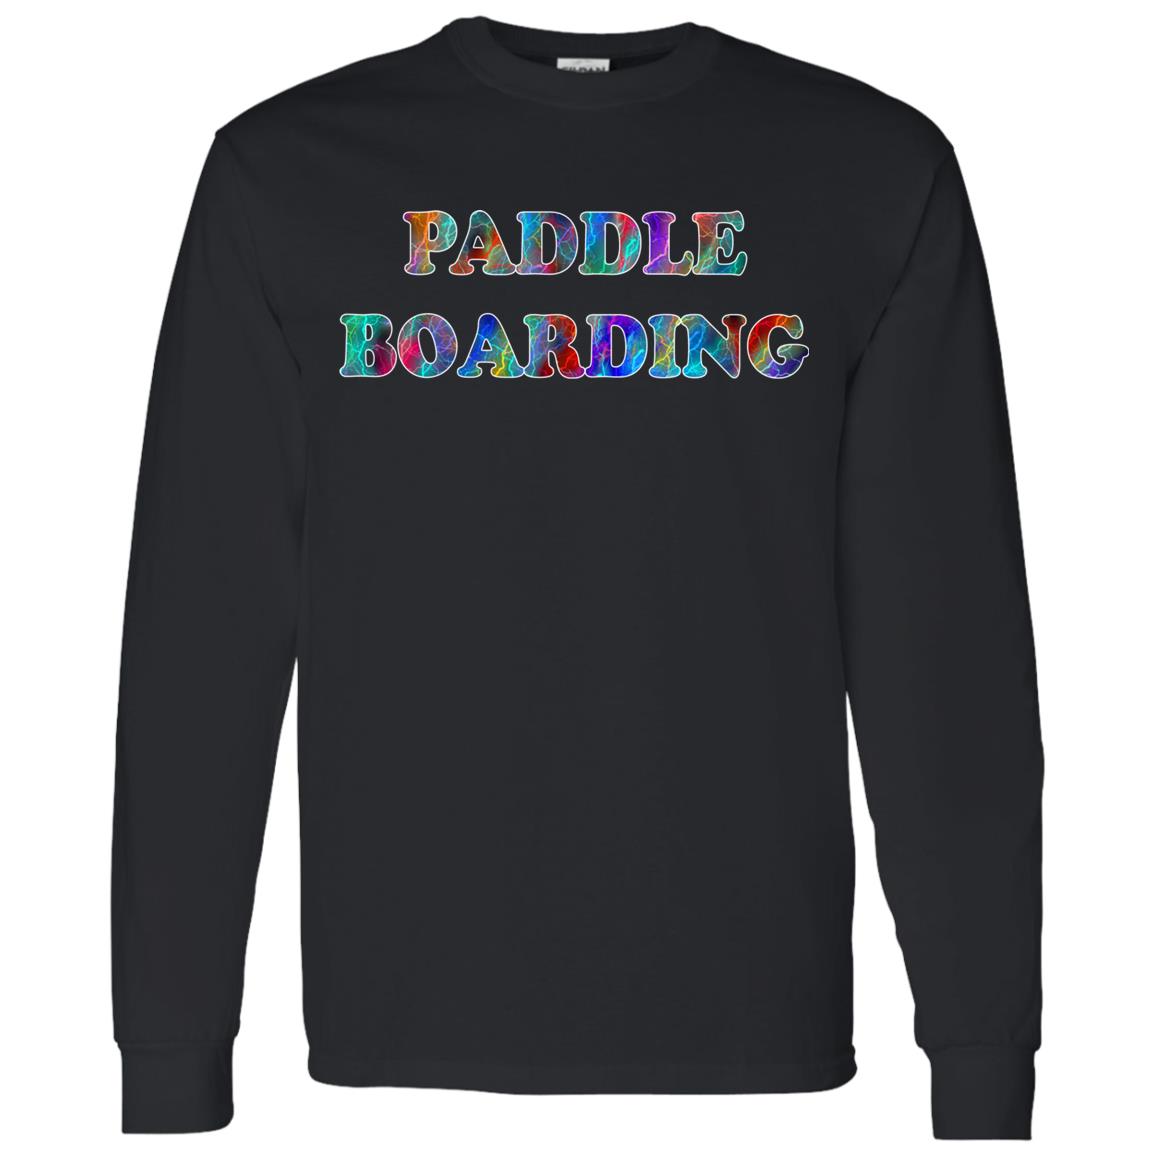 Paddle Boarding LS T-Shirt